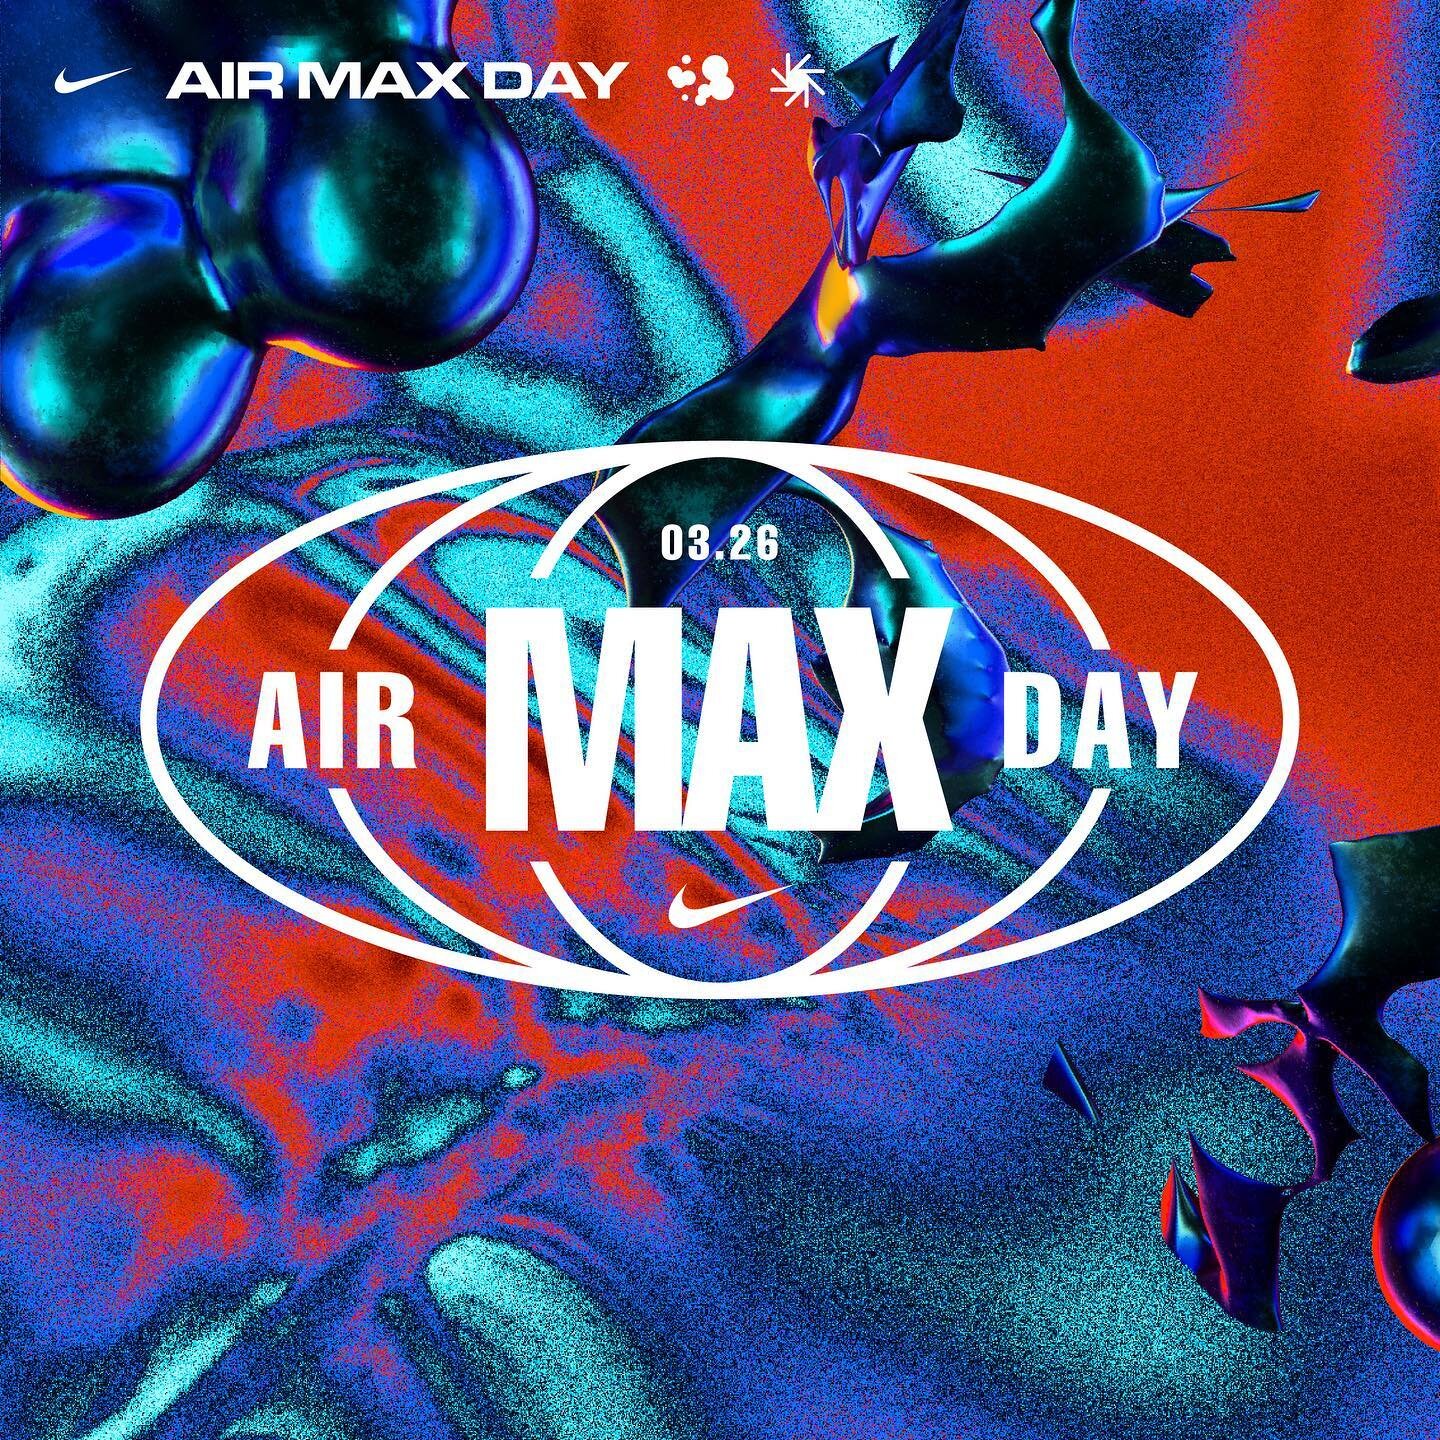 AMD ❤️💜💙

#airmaxday #airmax #amd23 #airmaxday2023 #nikechina